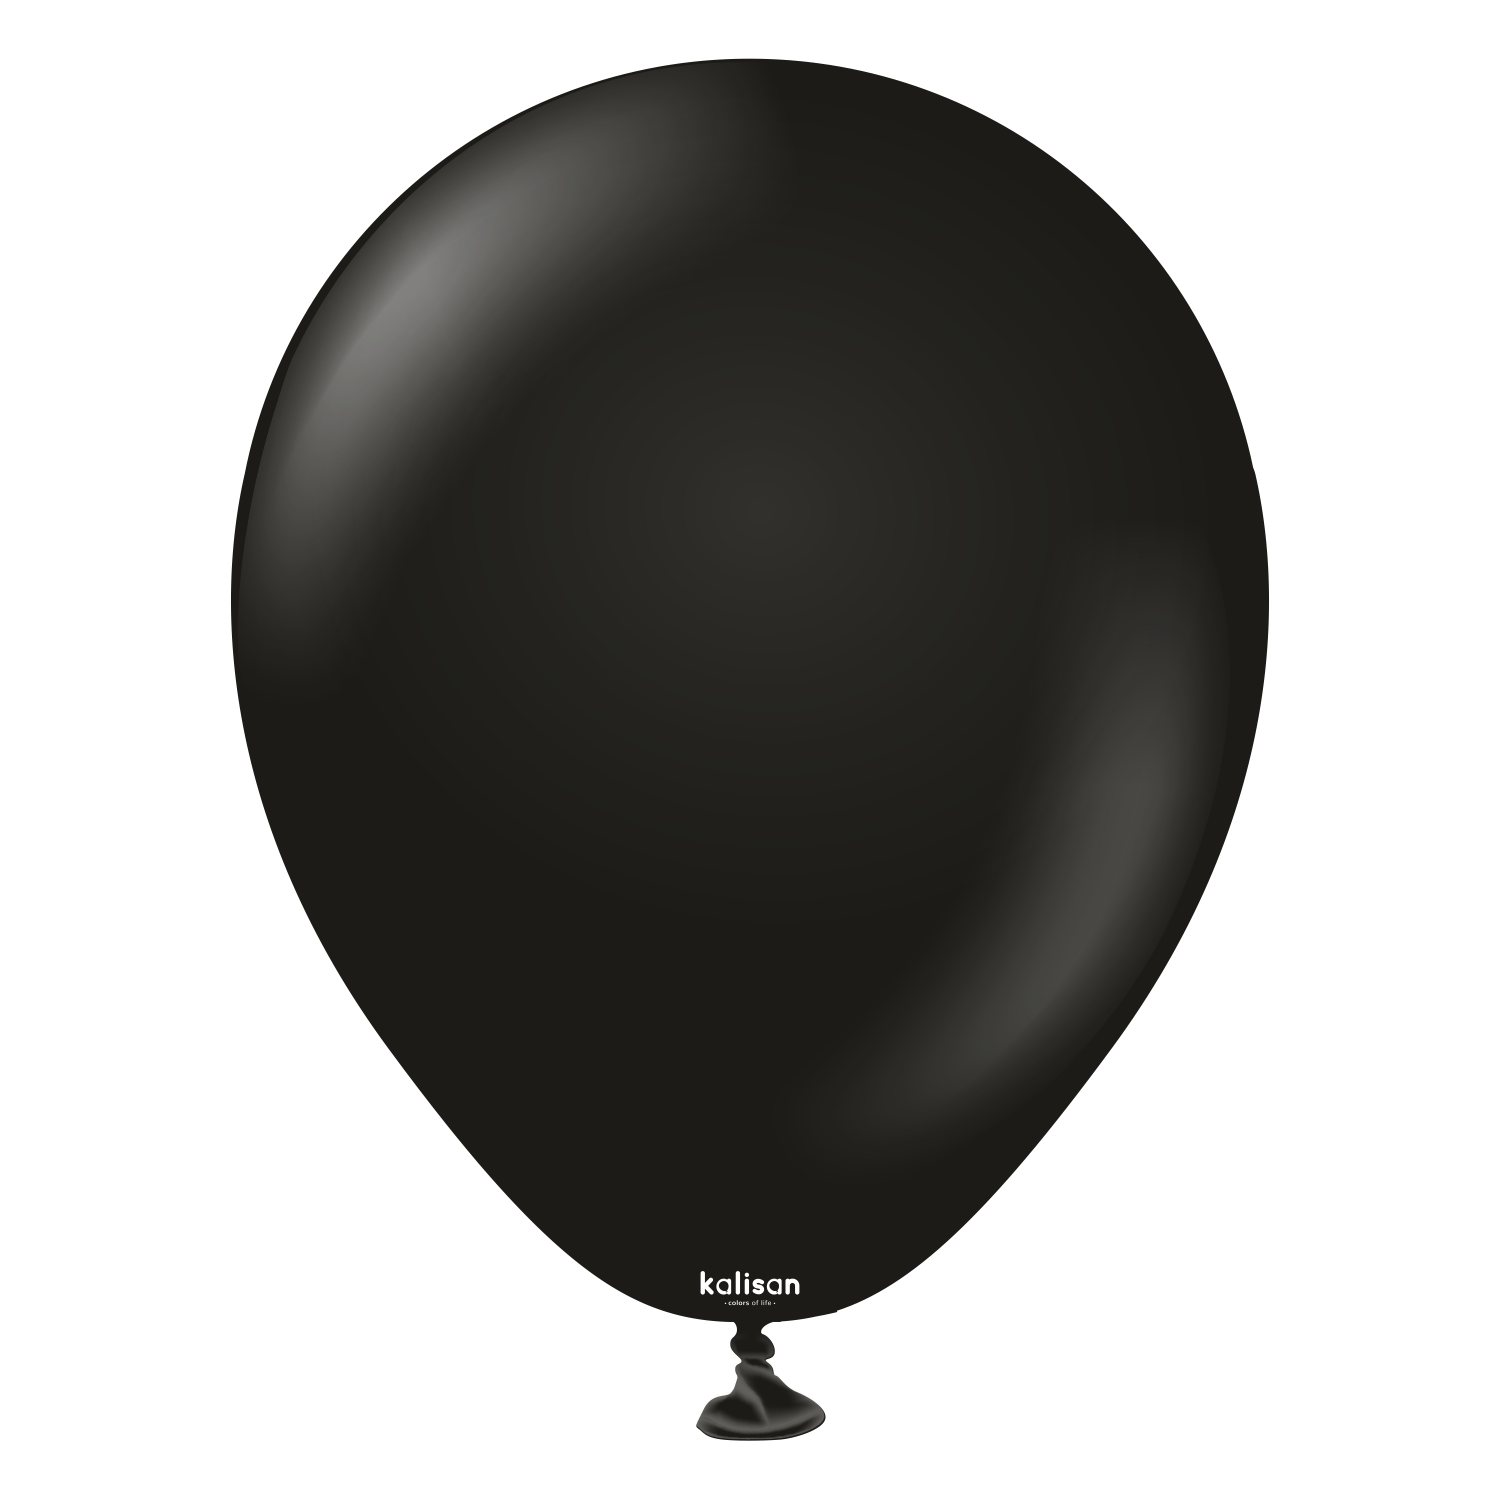 Kalisan 18" round standard balloons